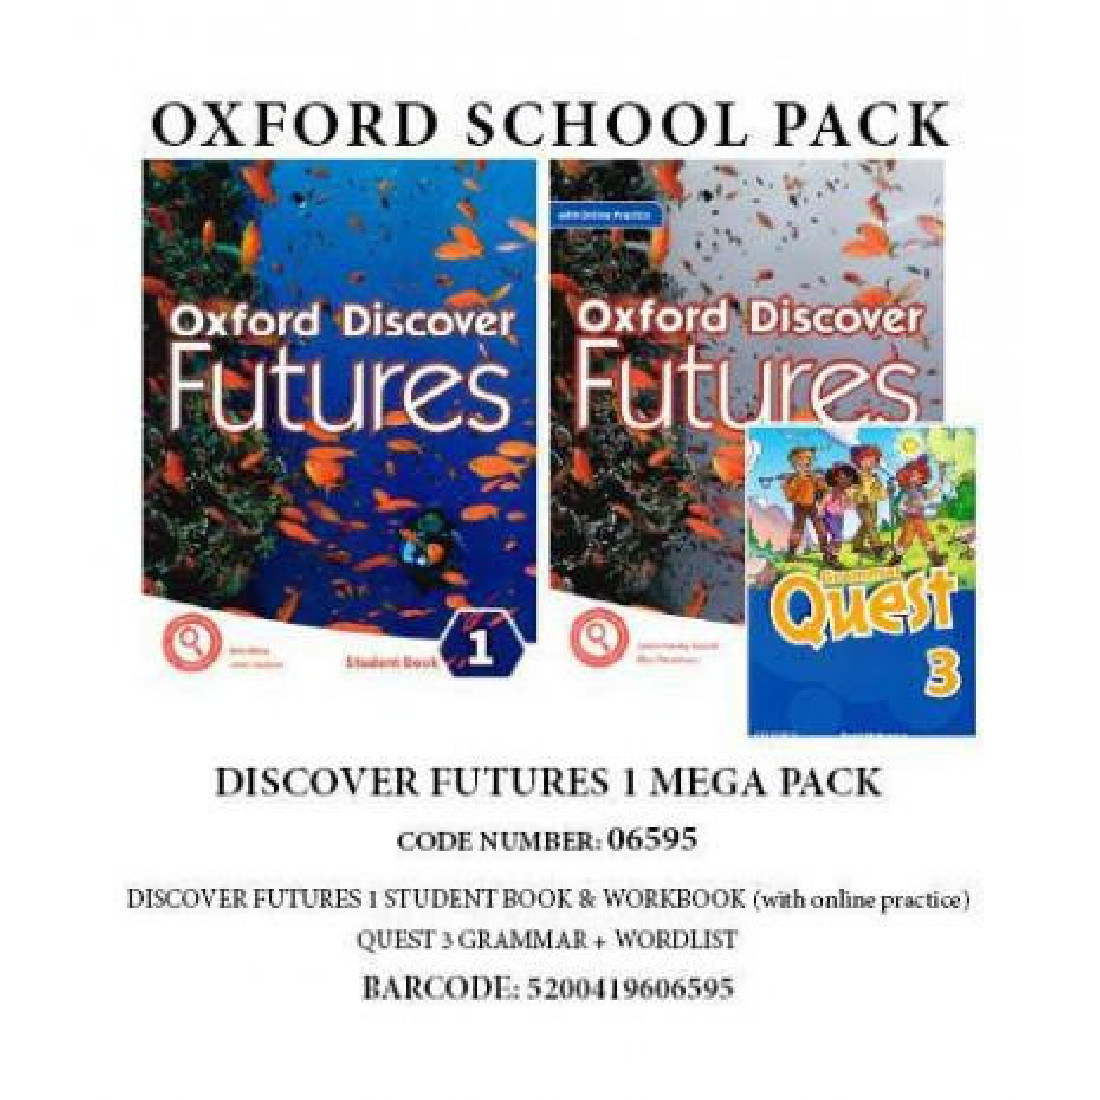 OXFORD DISCOVER FUTURES 1 MEGA PACK (DISCOVER FUTURES 1 ST/BK DISCOVER FUTURES 1 WKBK (+ONLINE) QUEST 3 GRAMMAR WORDLIST) - 06595